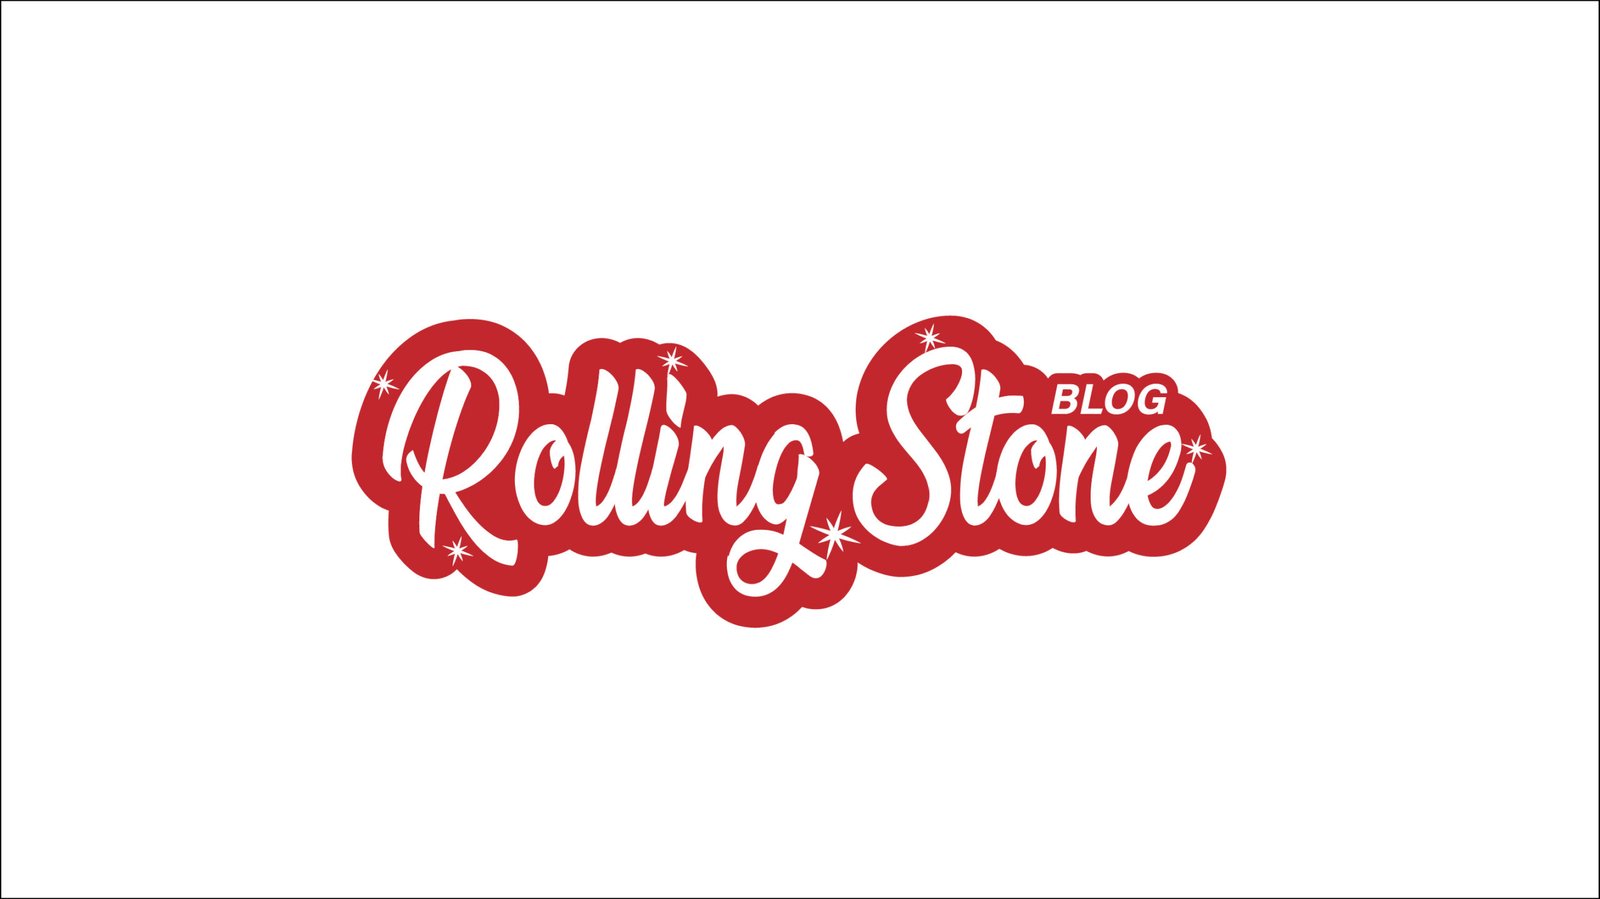 Rolling Stone Blog